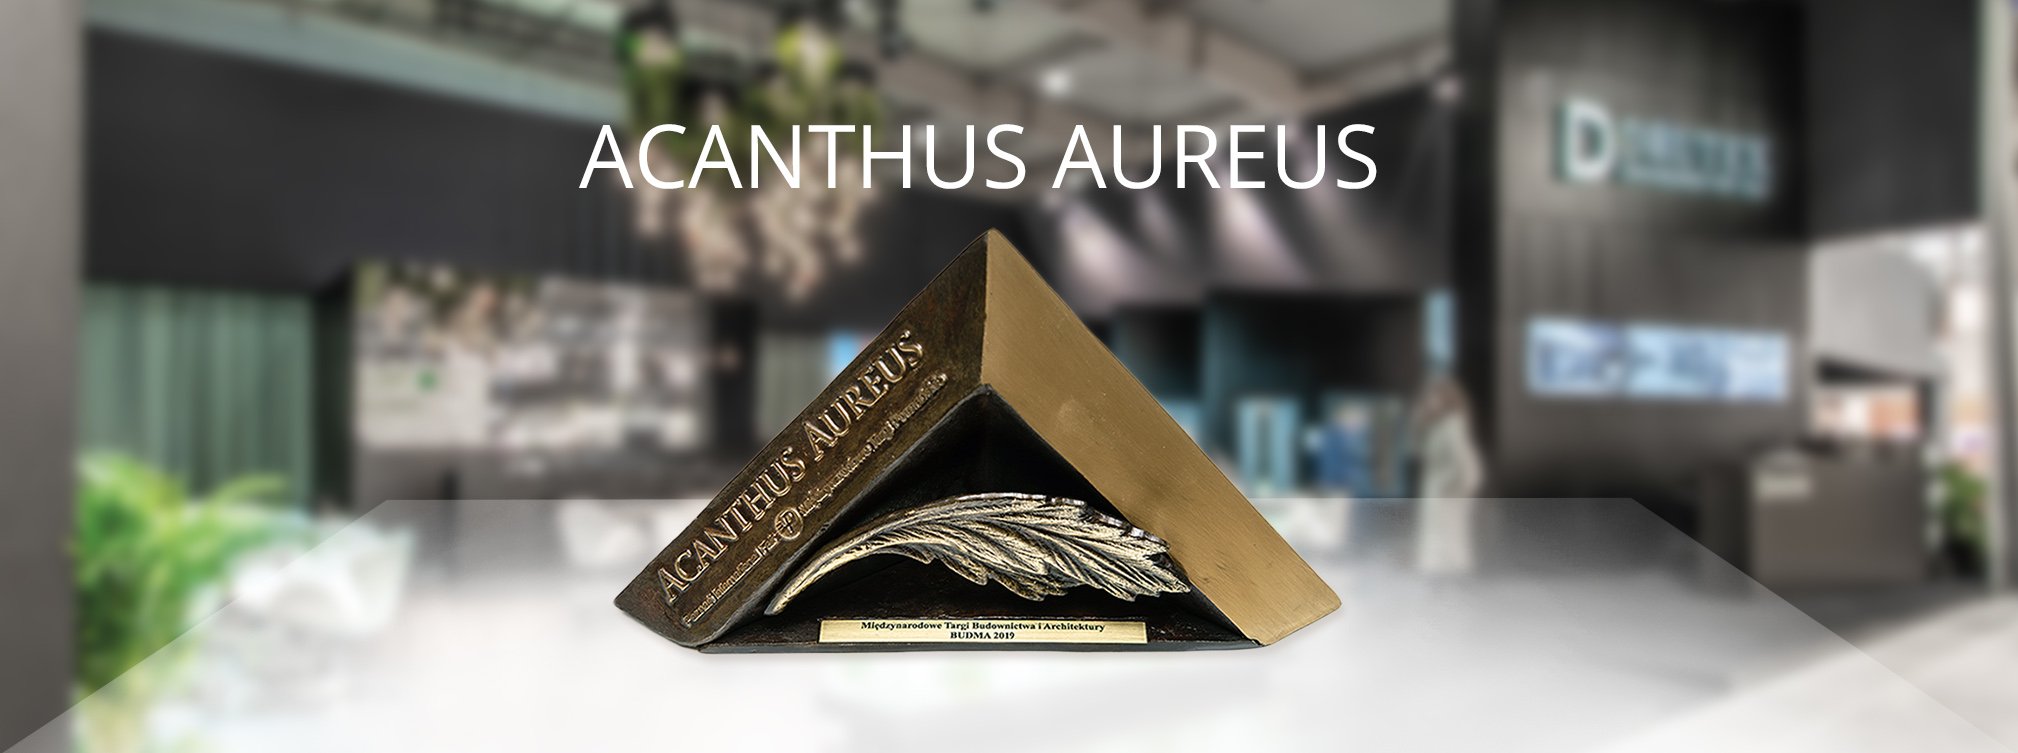 Drutex receives the Golden Acanthus award